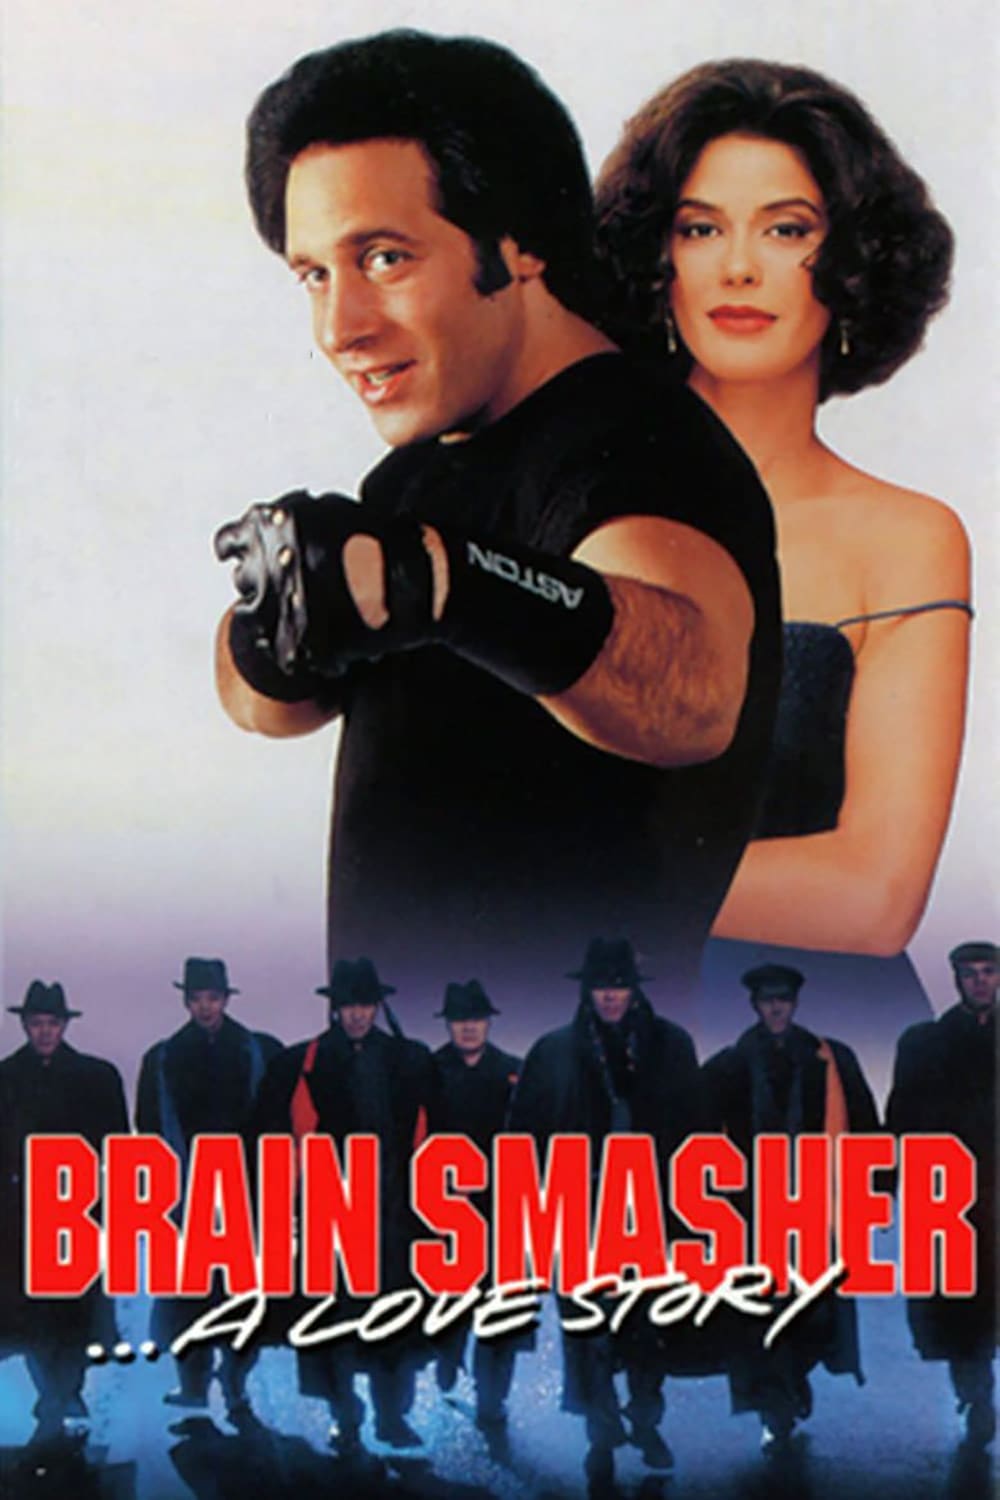 Brain Smasher... A Love Story (1993)